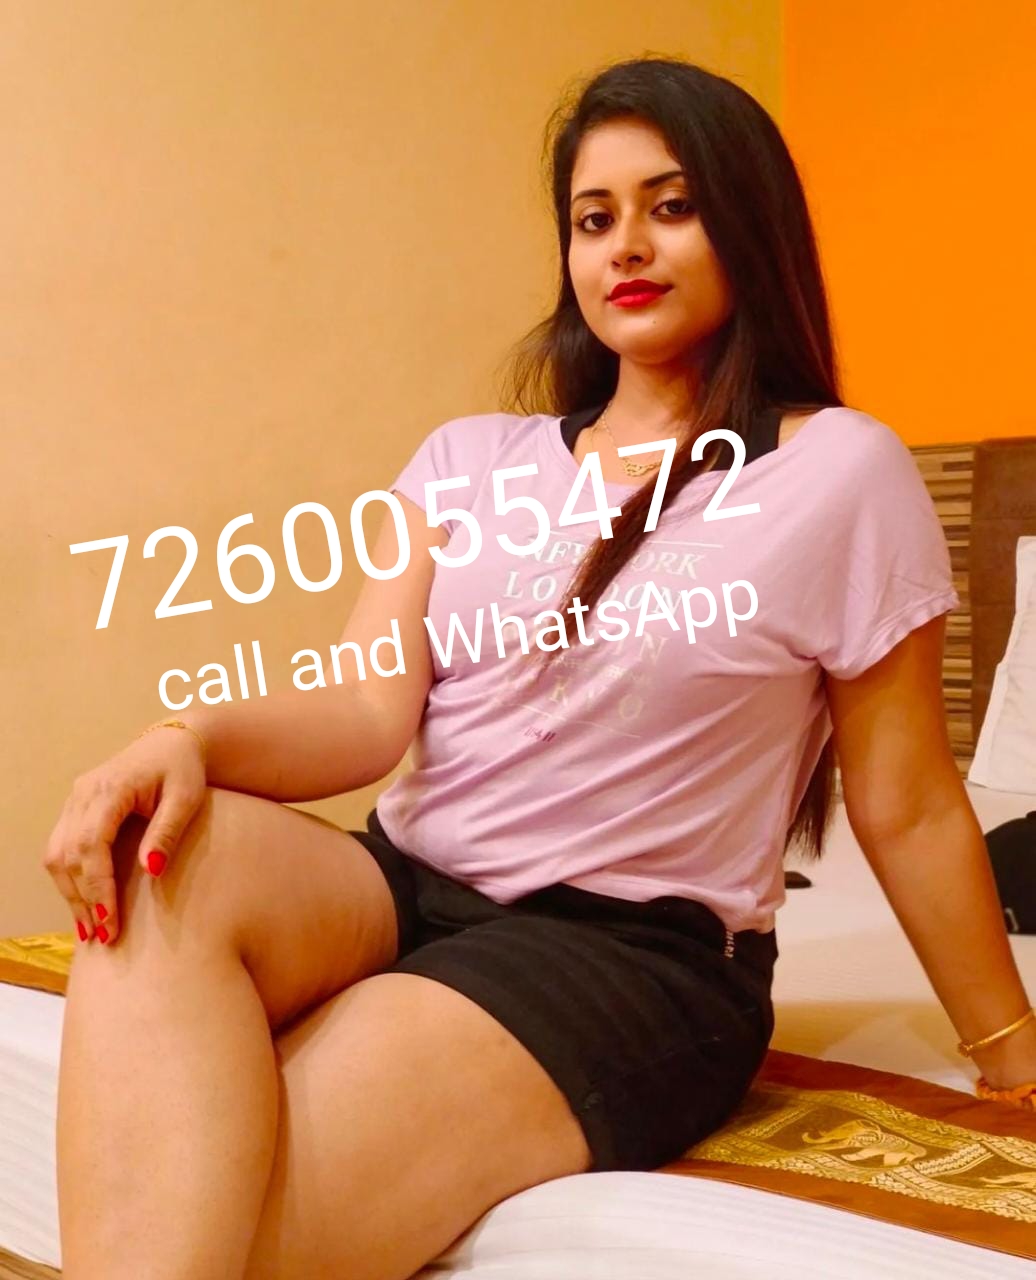 Low price %⭐⭐⭐ genuine sexy VIP call girls are providec